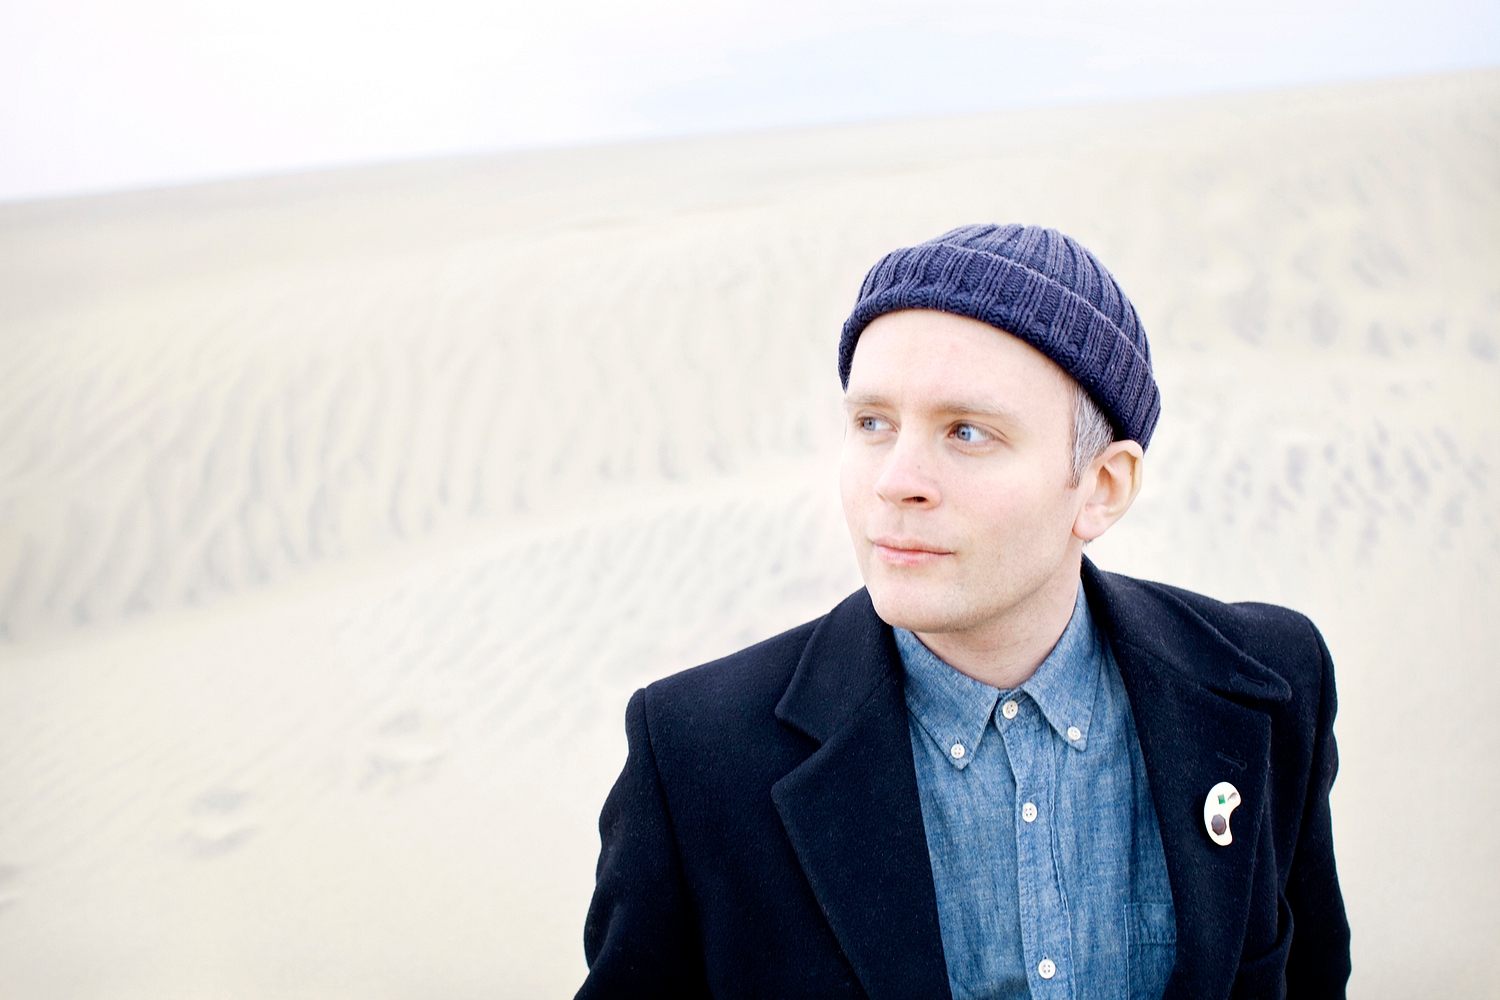 Jens Lekman showcases fourth track in ‘Postcard’ series